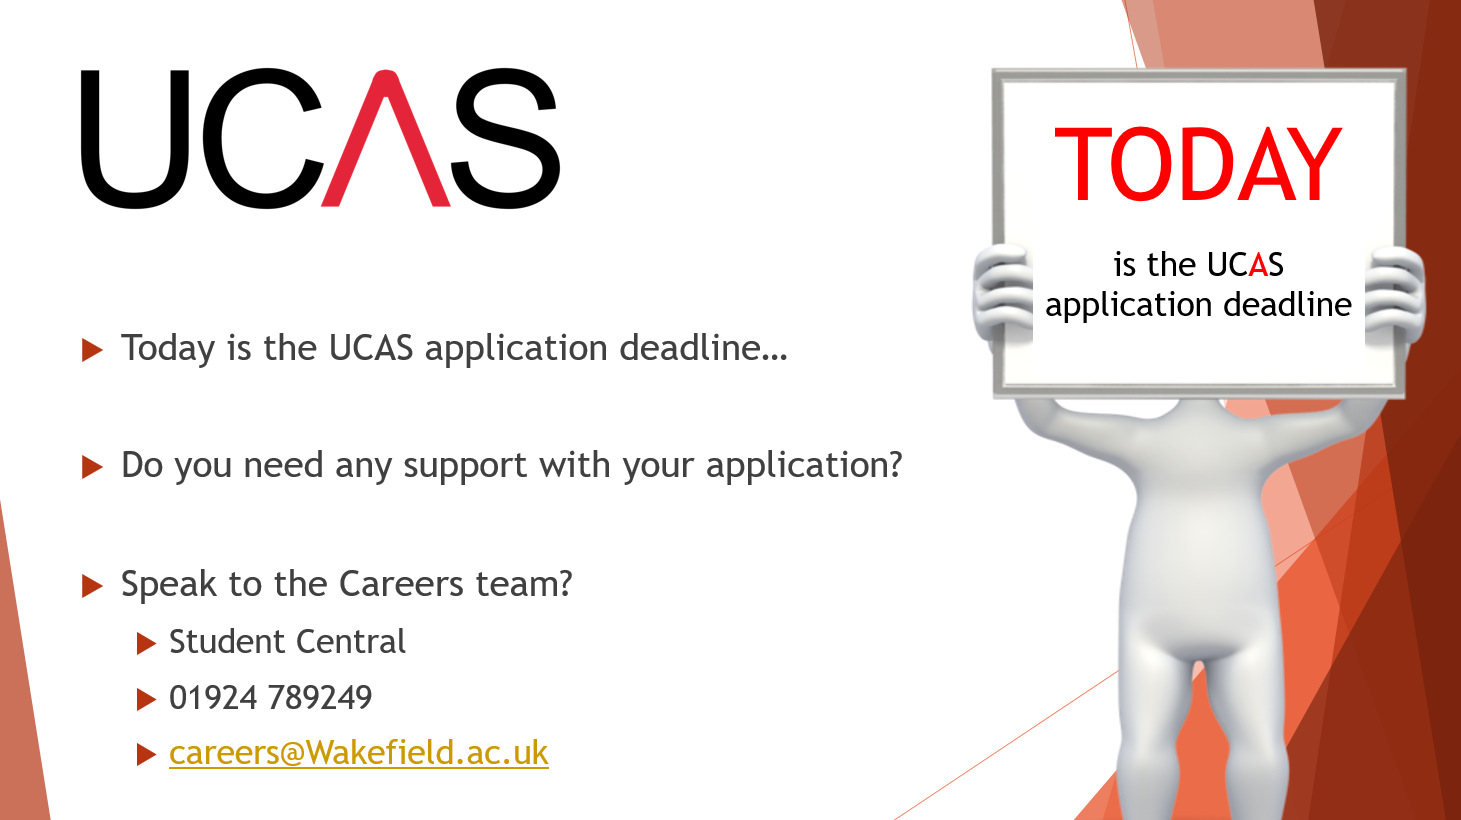 WM The UCAS application deadline is TODAY!